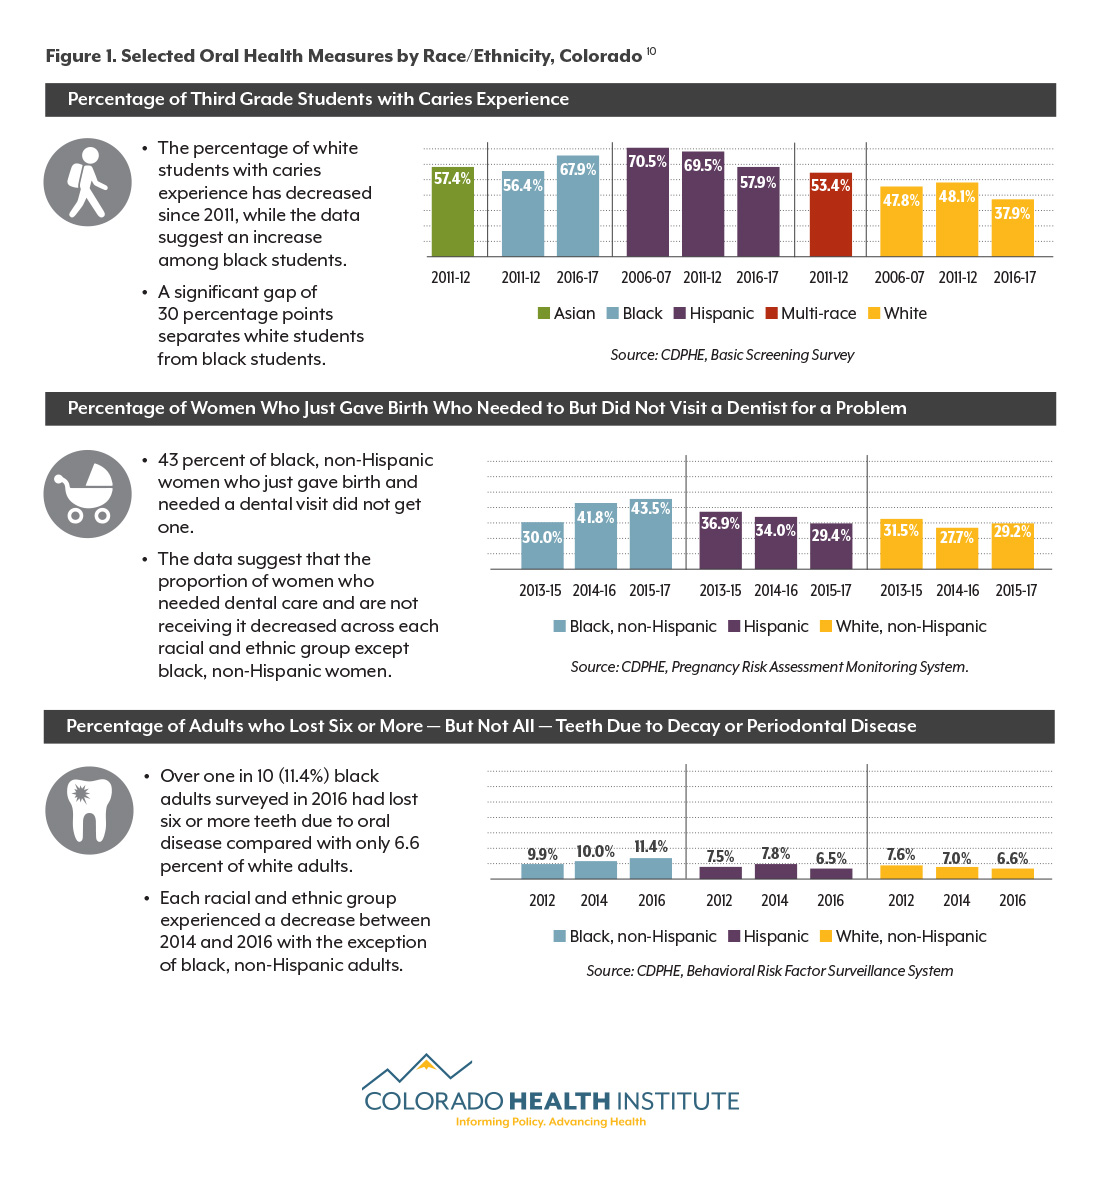 Figure 1. Selected Oral Health Measures by Race/Ethnicity, Colorado 